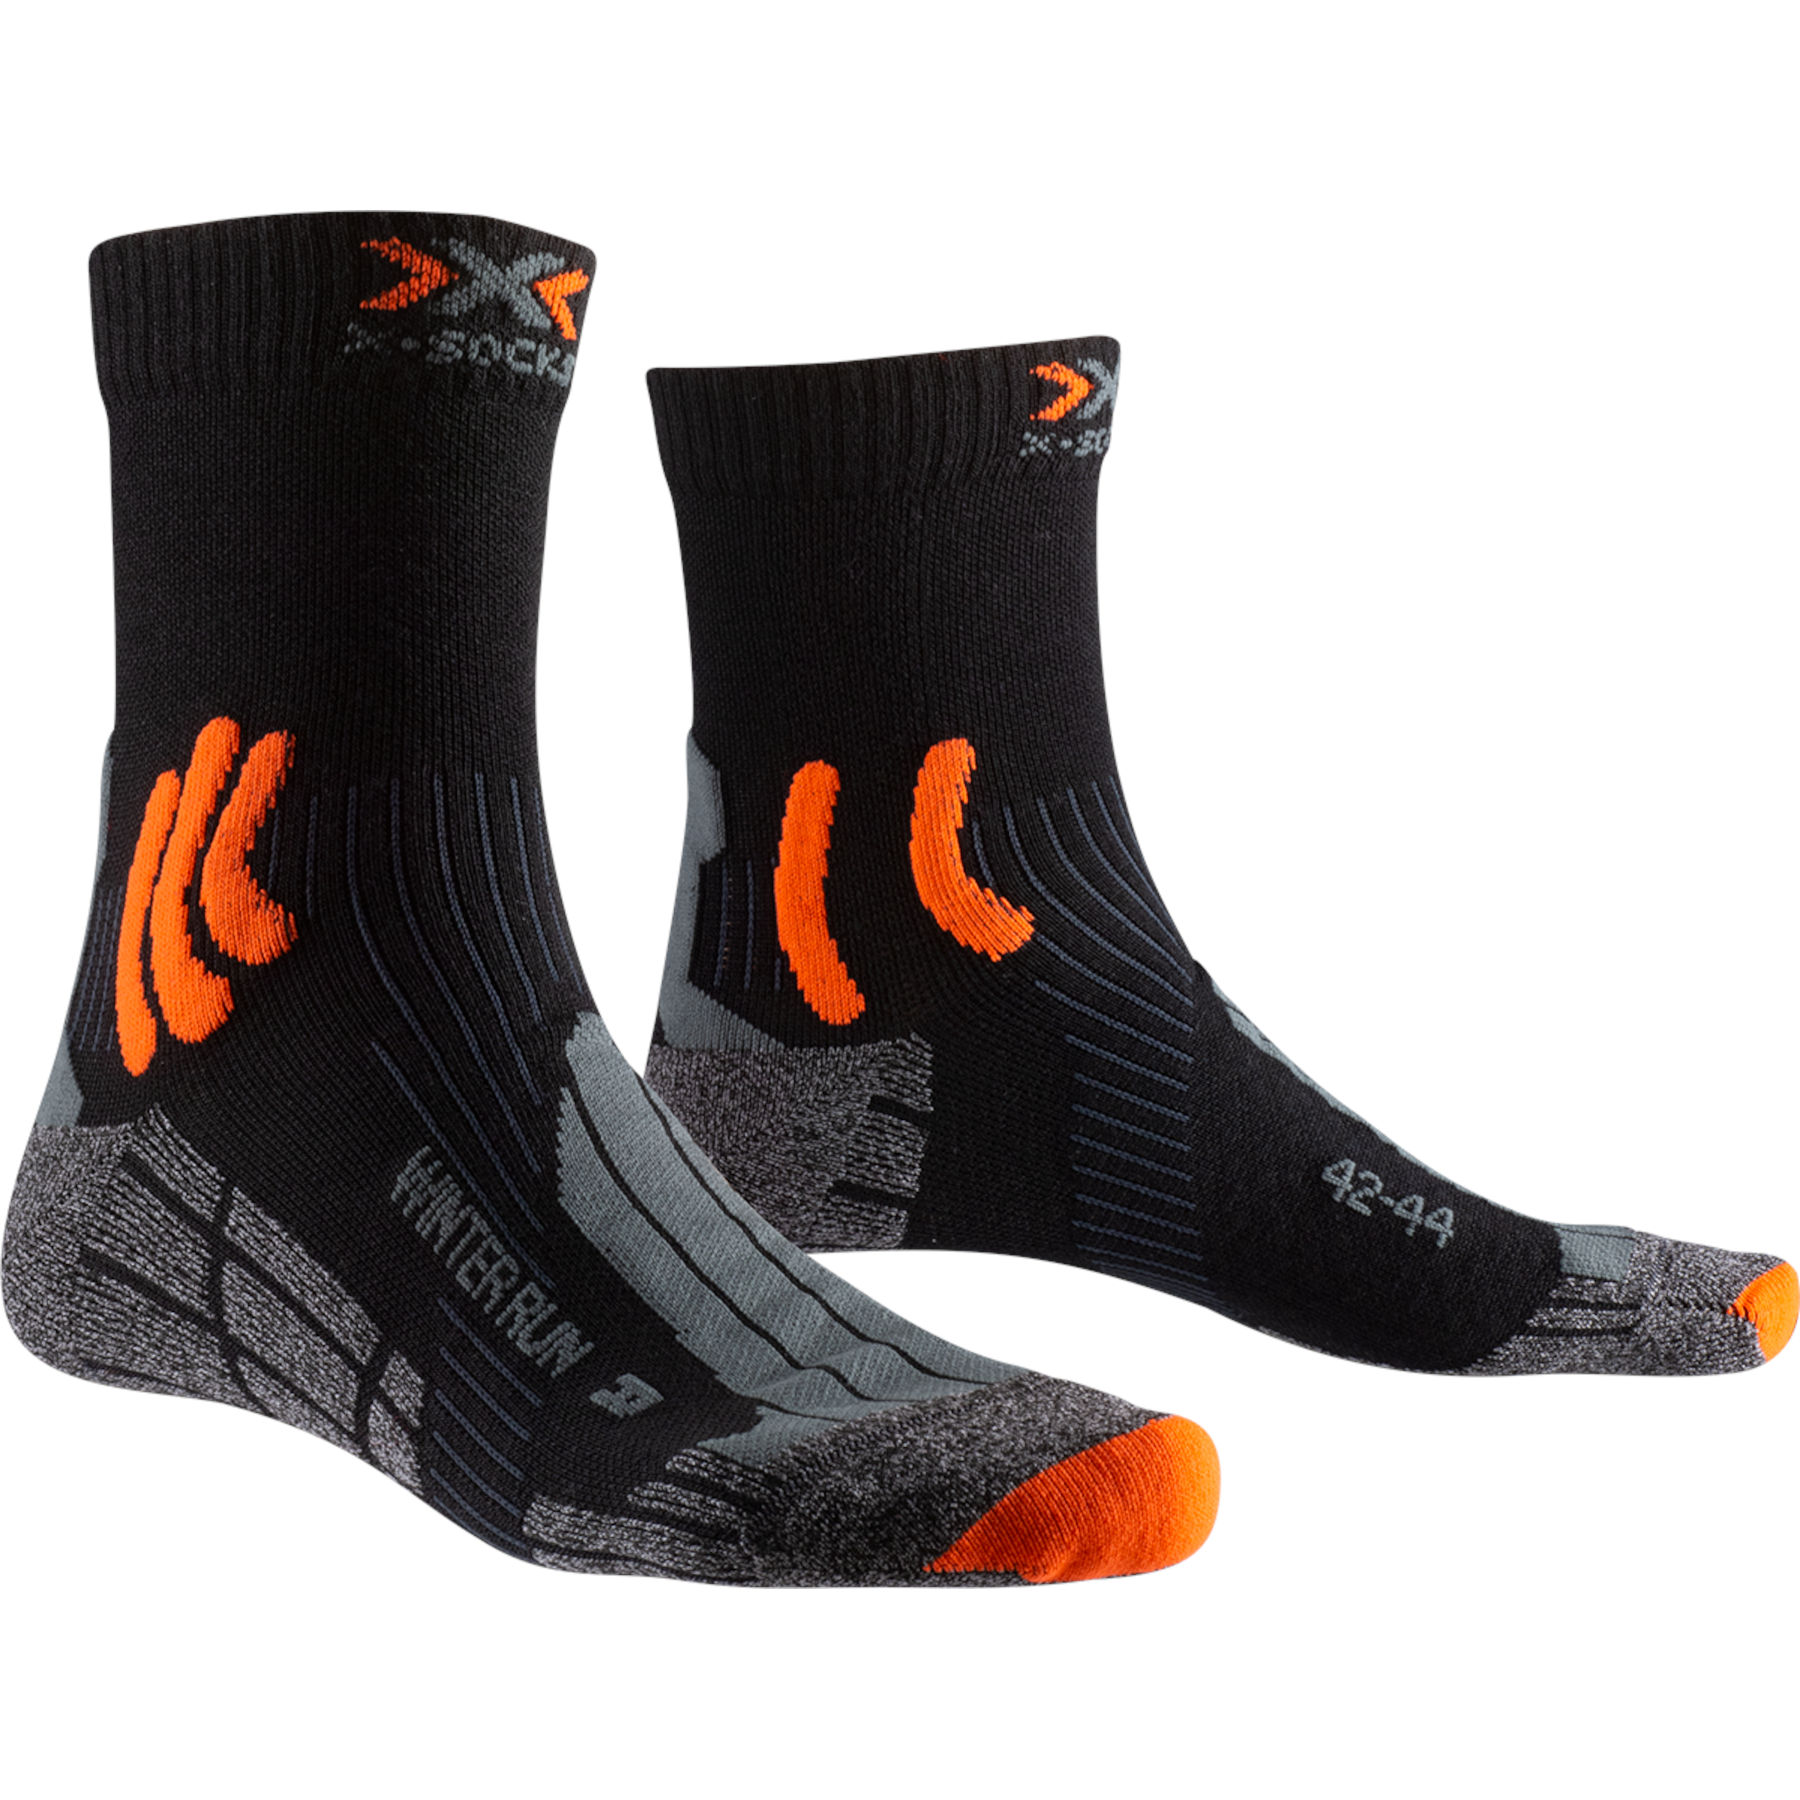 Productfoto van X-Socks Winter Run Hardloopsokken 4.0 - black/dark grey melange/x-orange